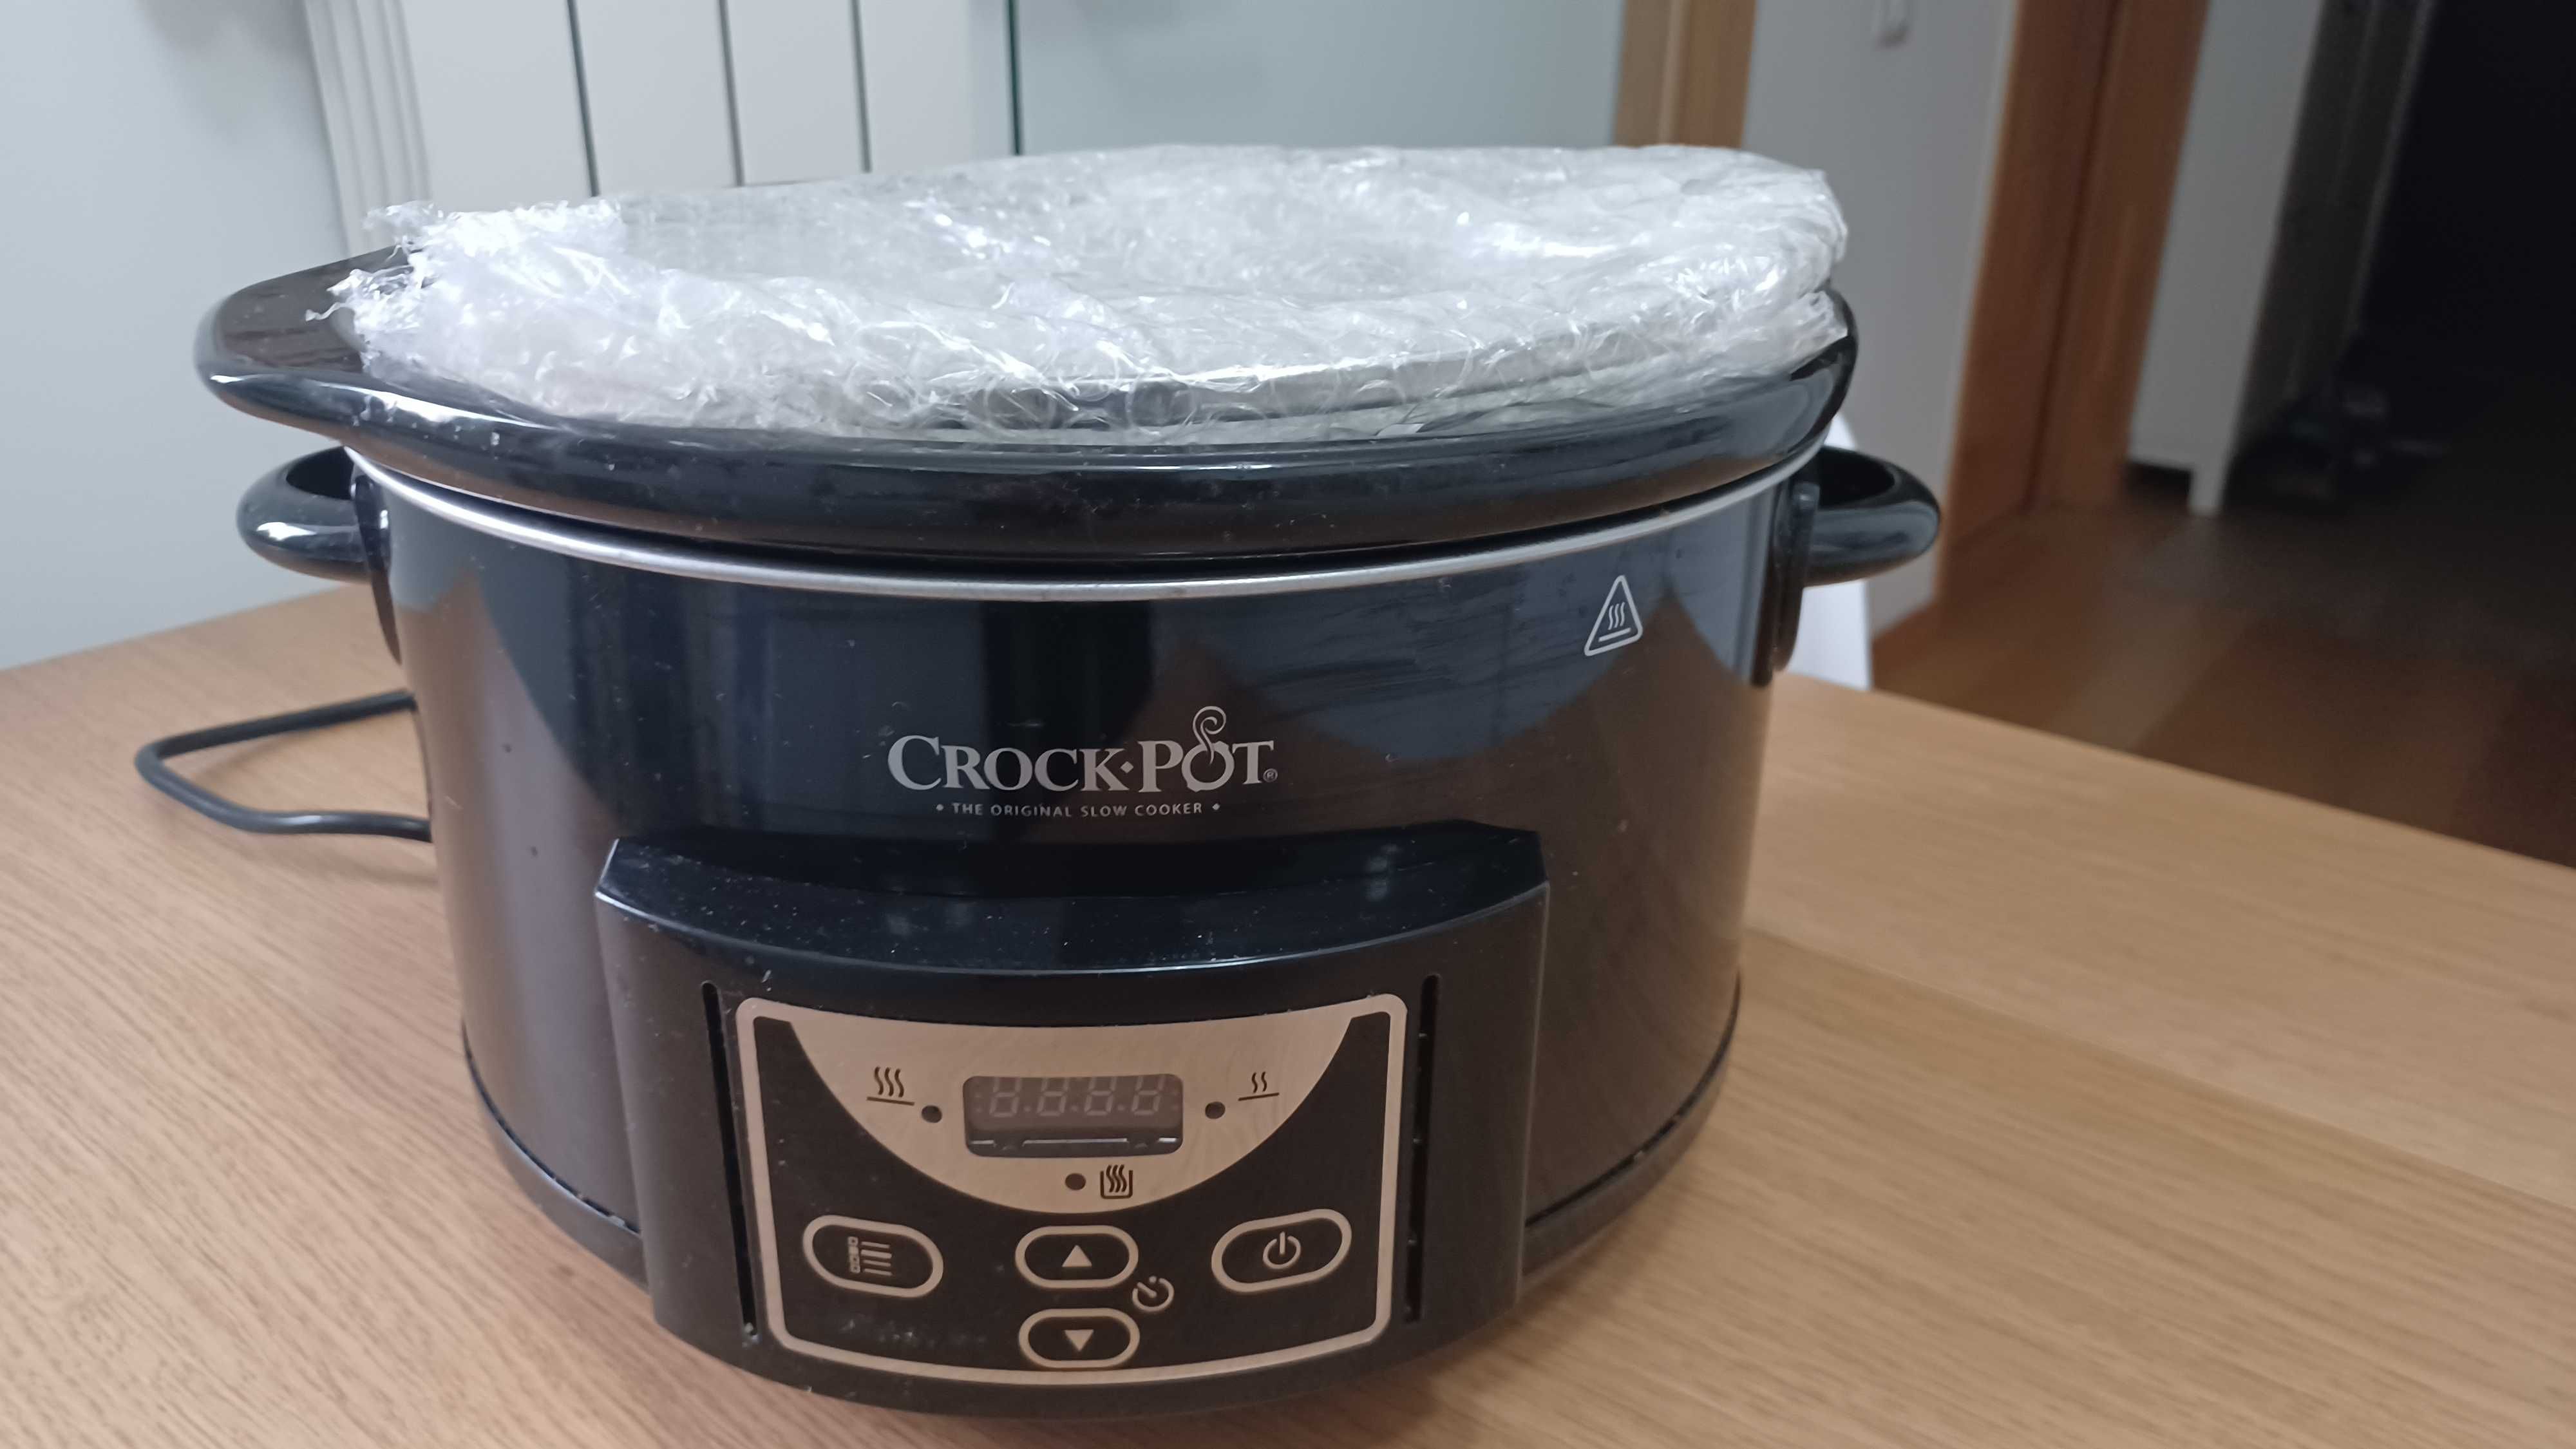 Slow Cooker 4.7L Digital Crockpot